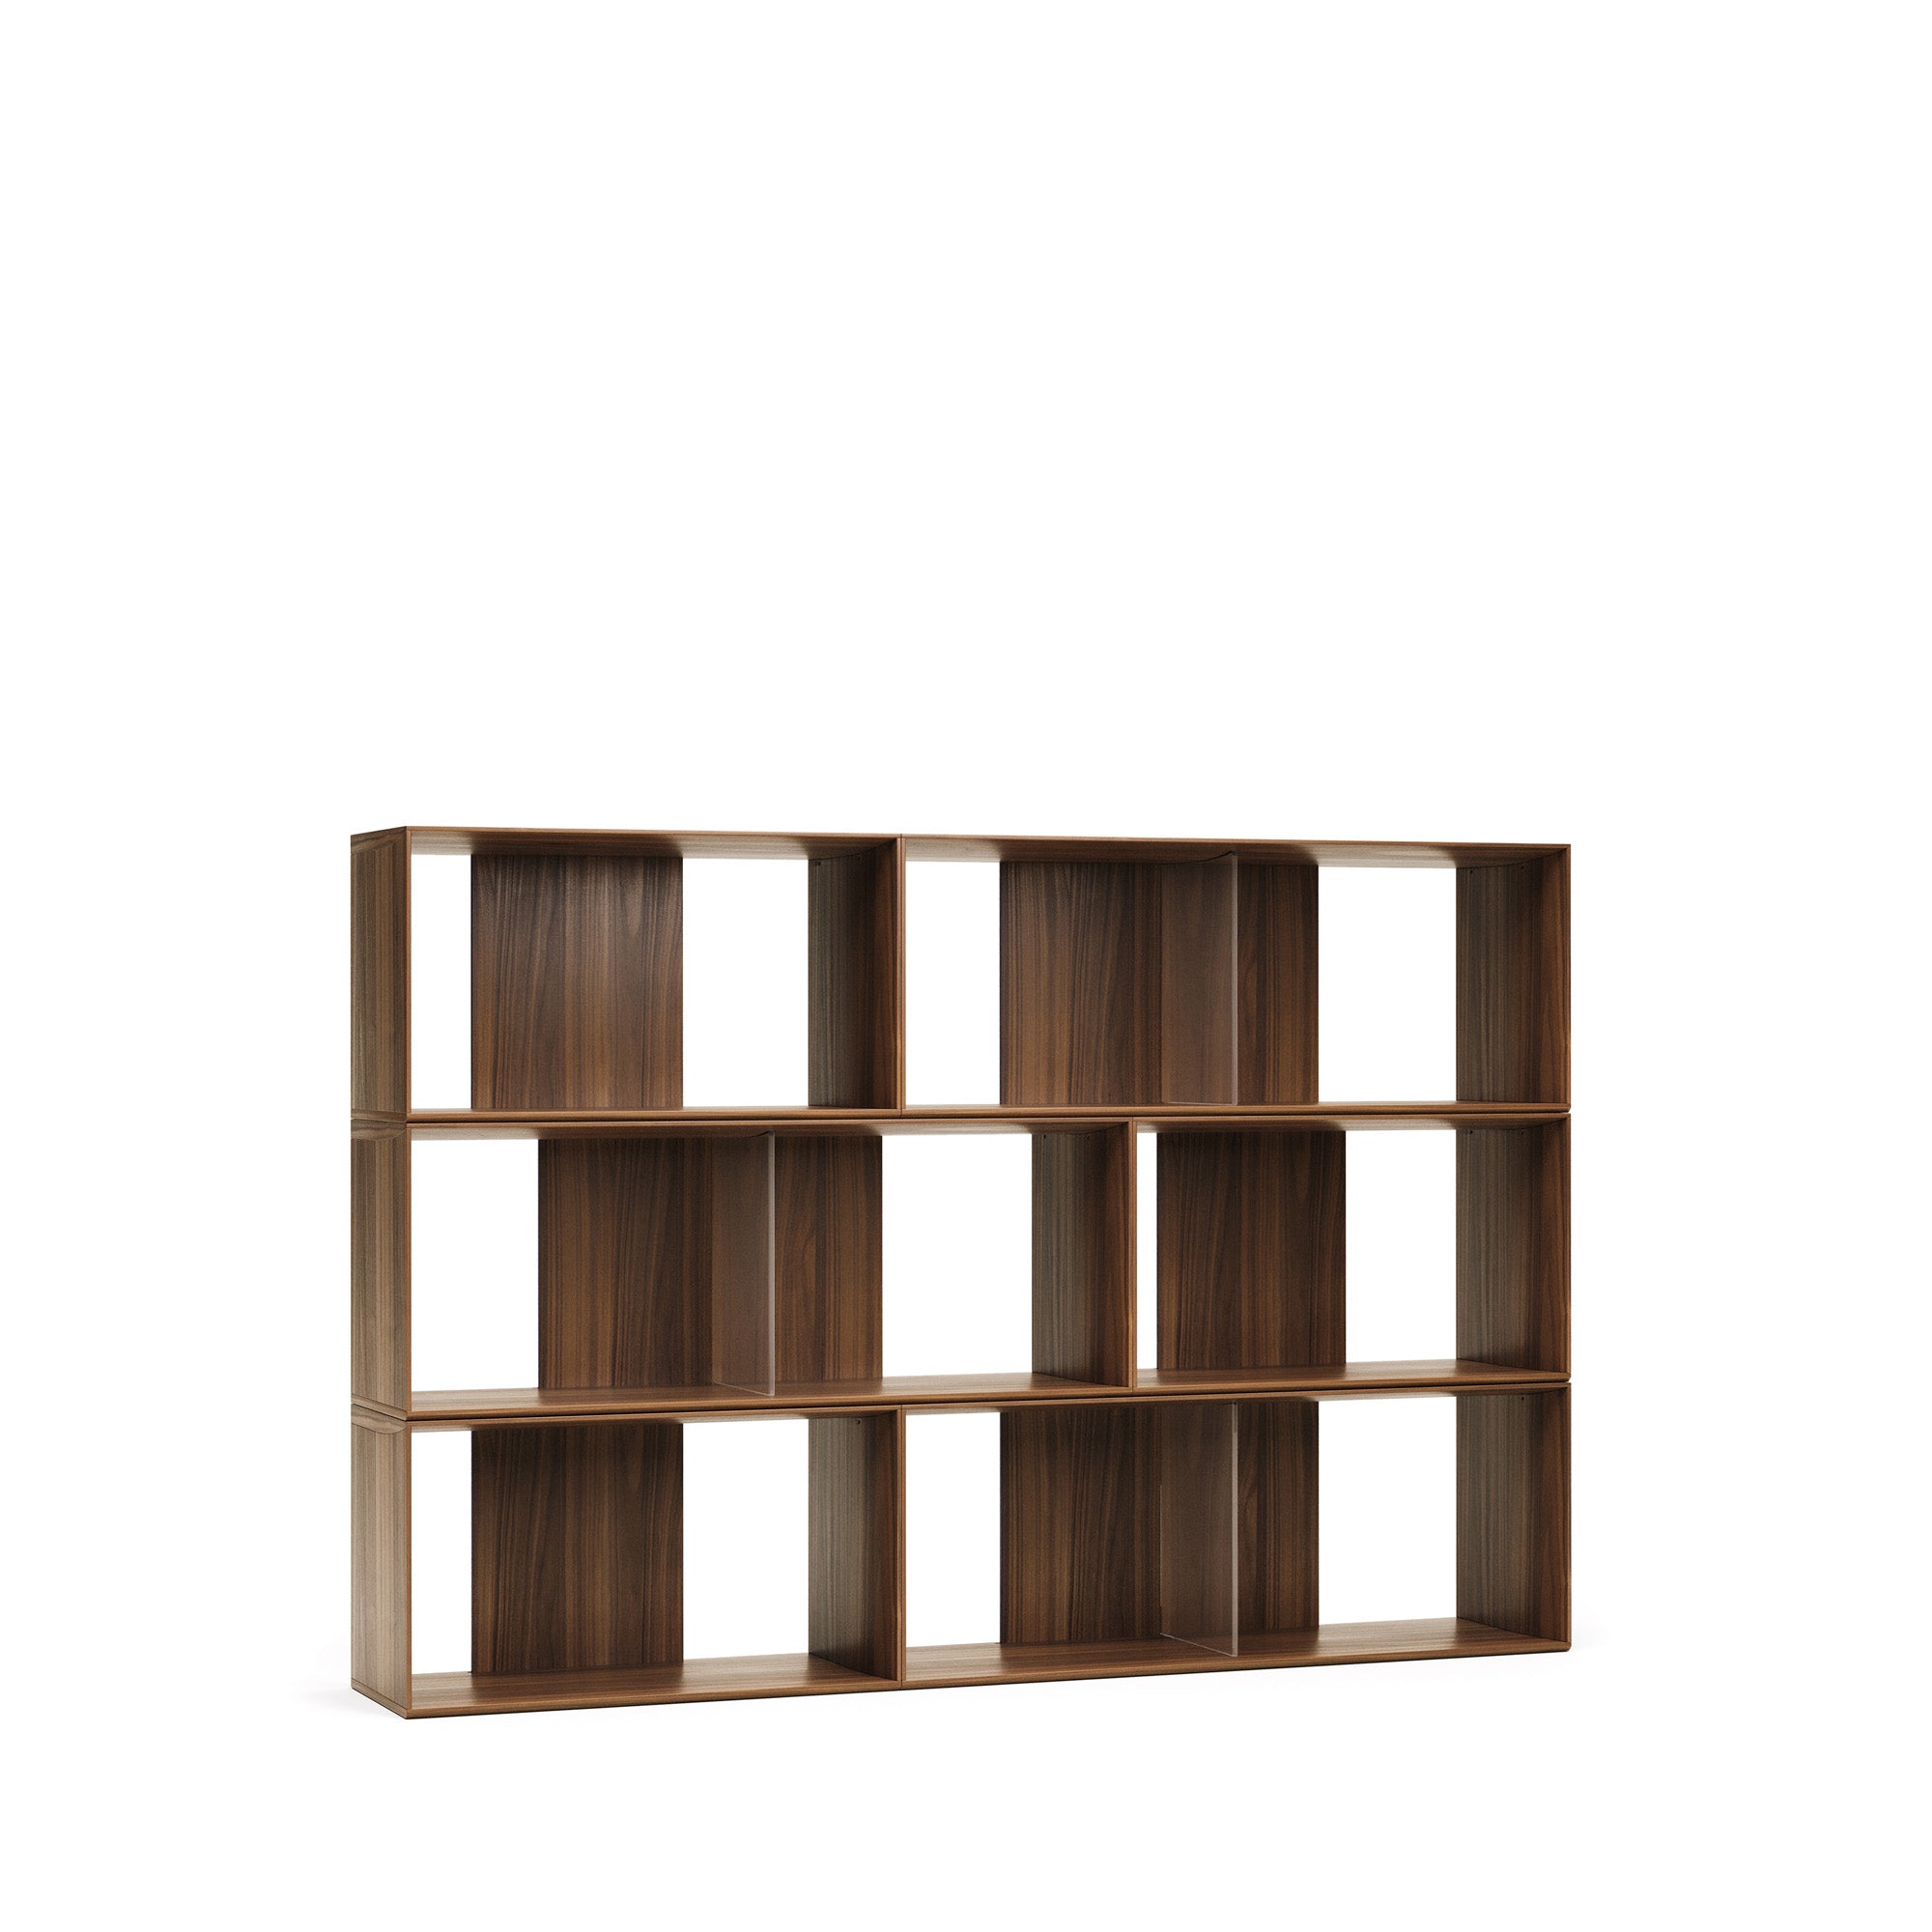 Litto set of 6 modular shelving units in walnut wood veneer, 168 x 114 cm